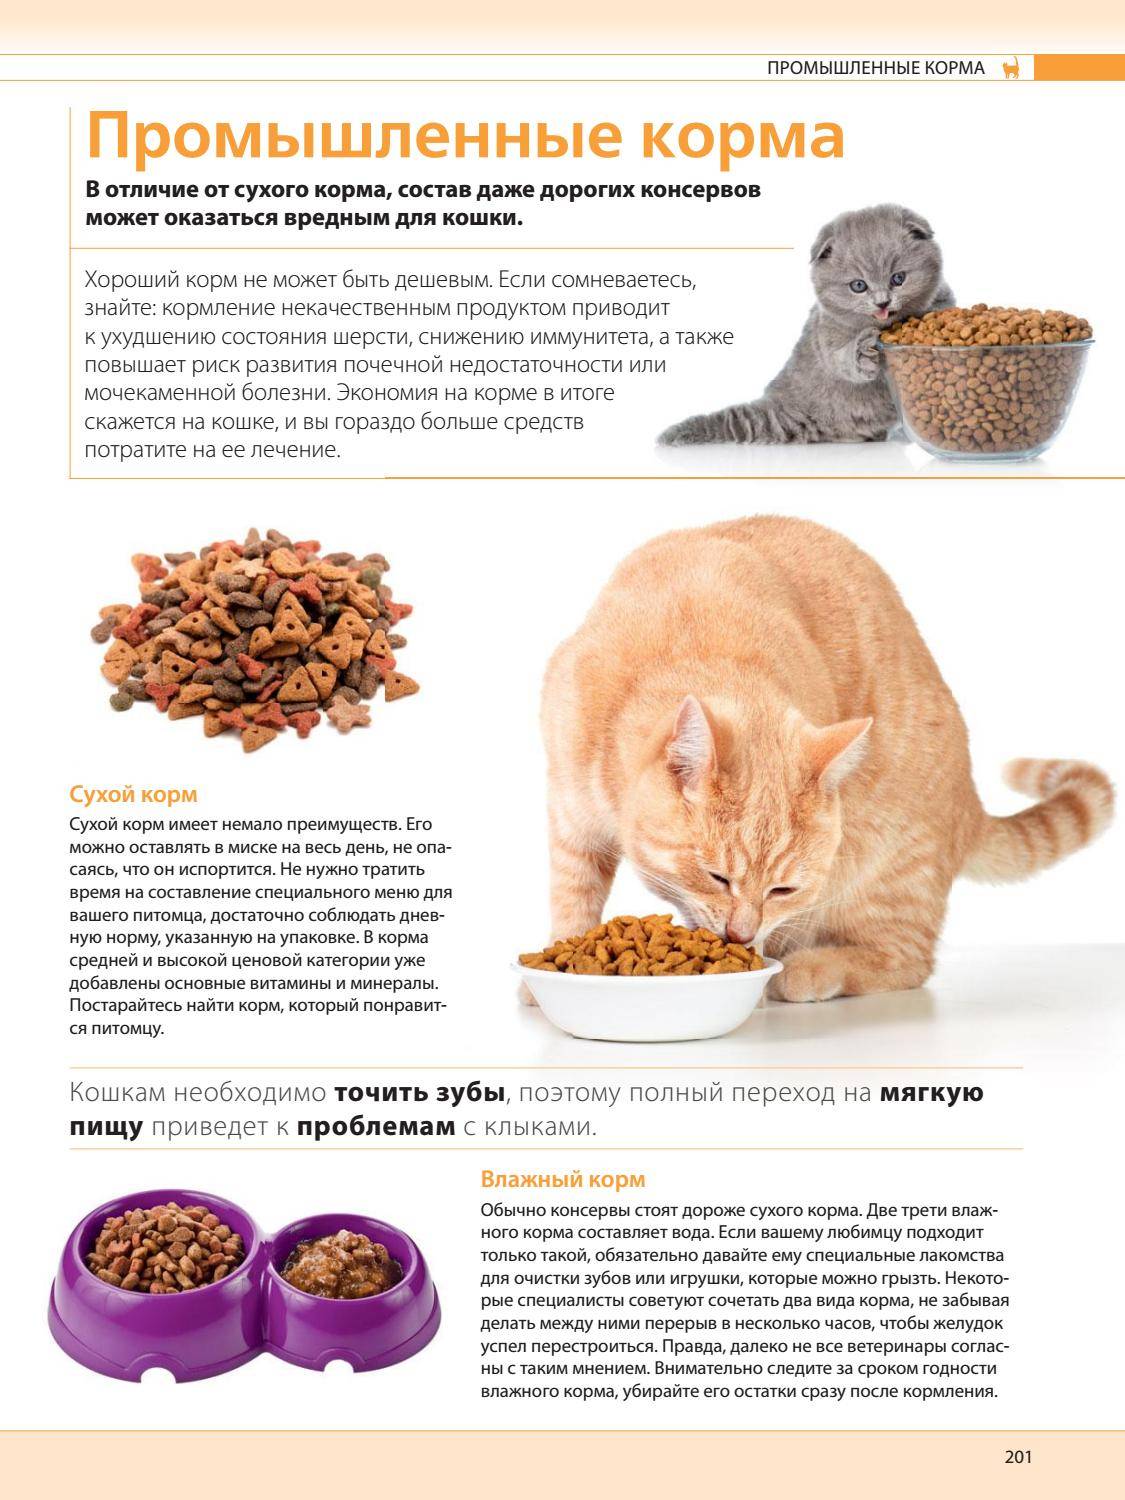 Чем кормить кота, кроме сухого корма: добавки к рациону, лакомства